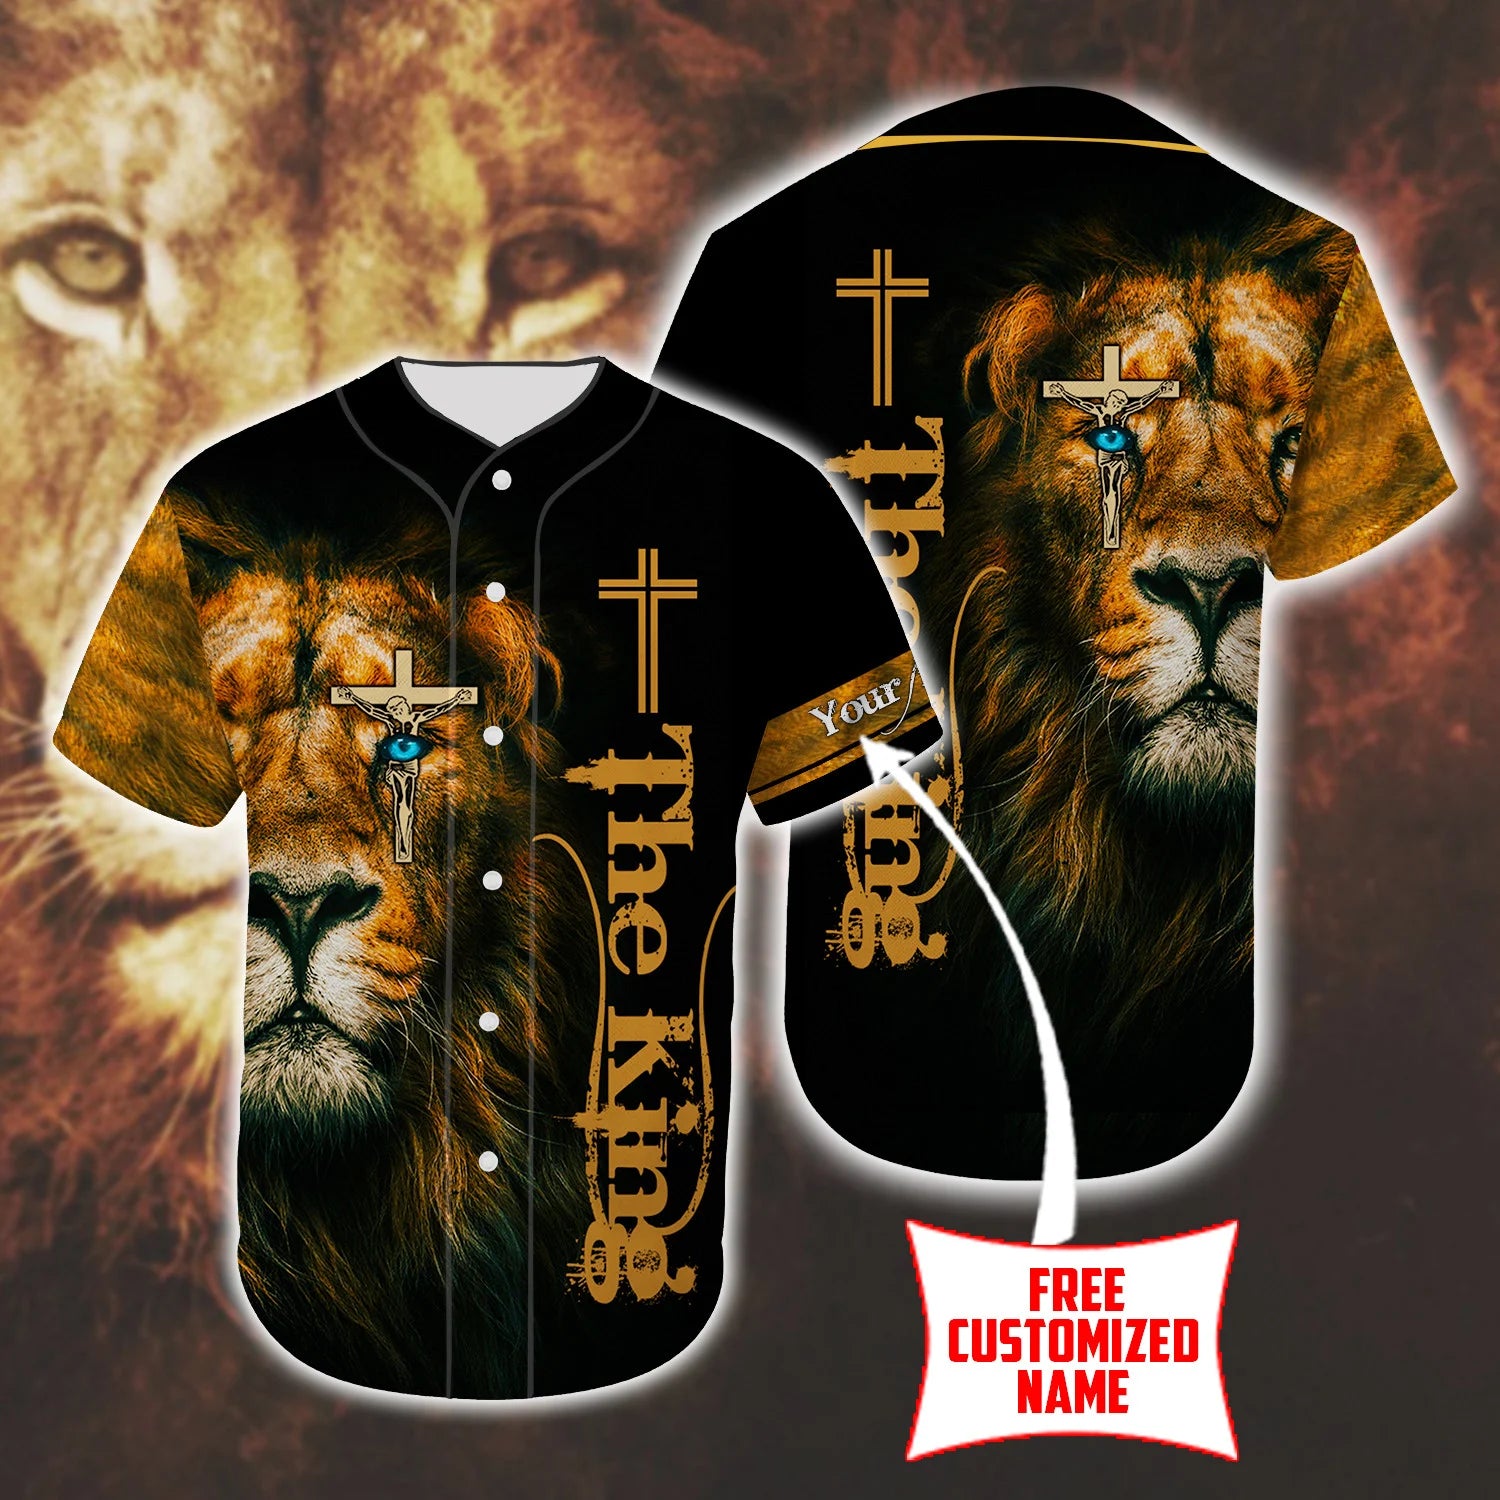 Personalized Jesus Baseball Jersey - Cross, Lion Baseball Jersey - Gift For Christians - The King Custom Printed Baseball Jersey Shirt For Men Women